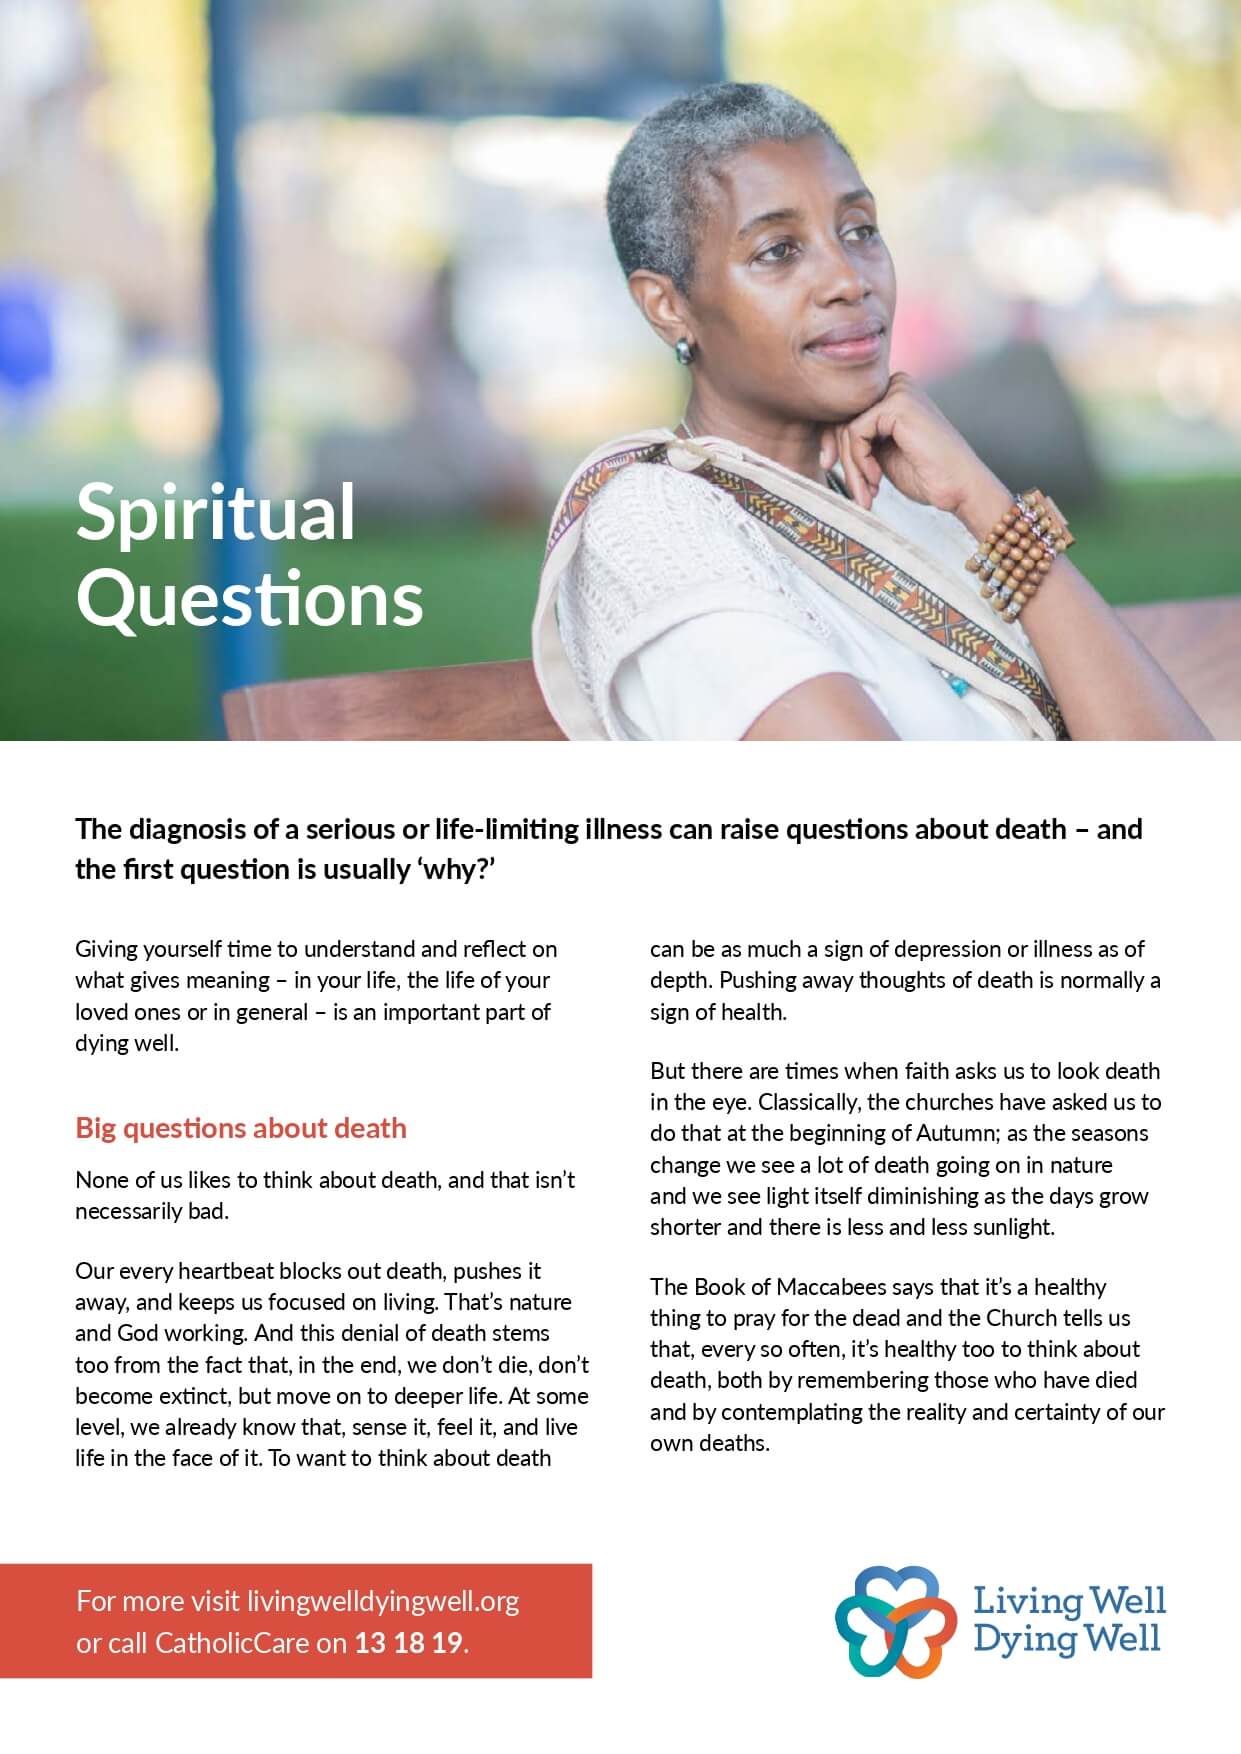 Spiritual questions fact sheet